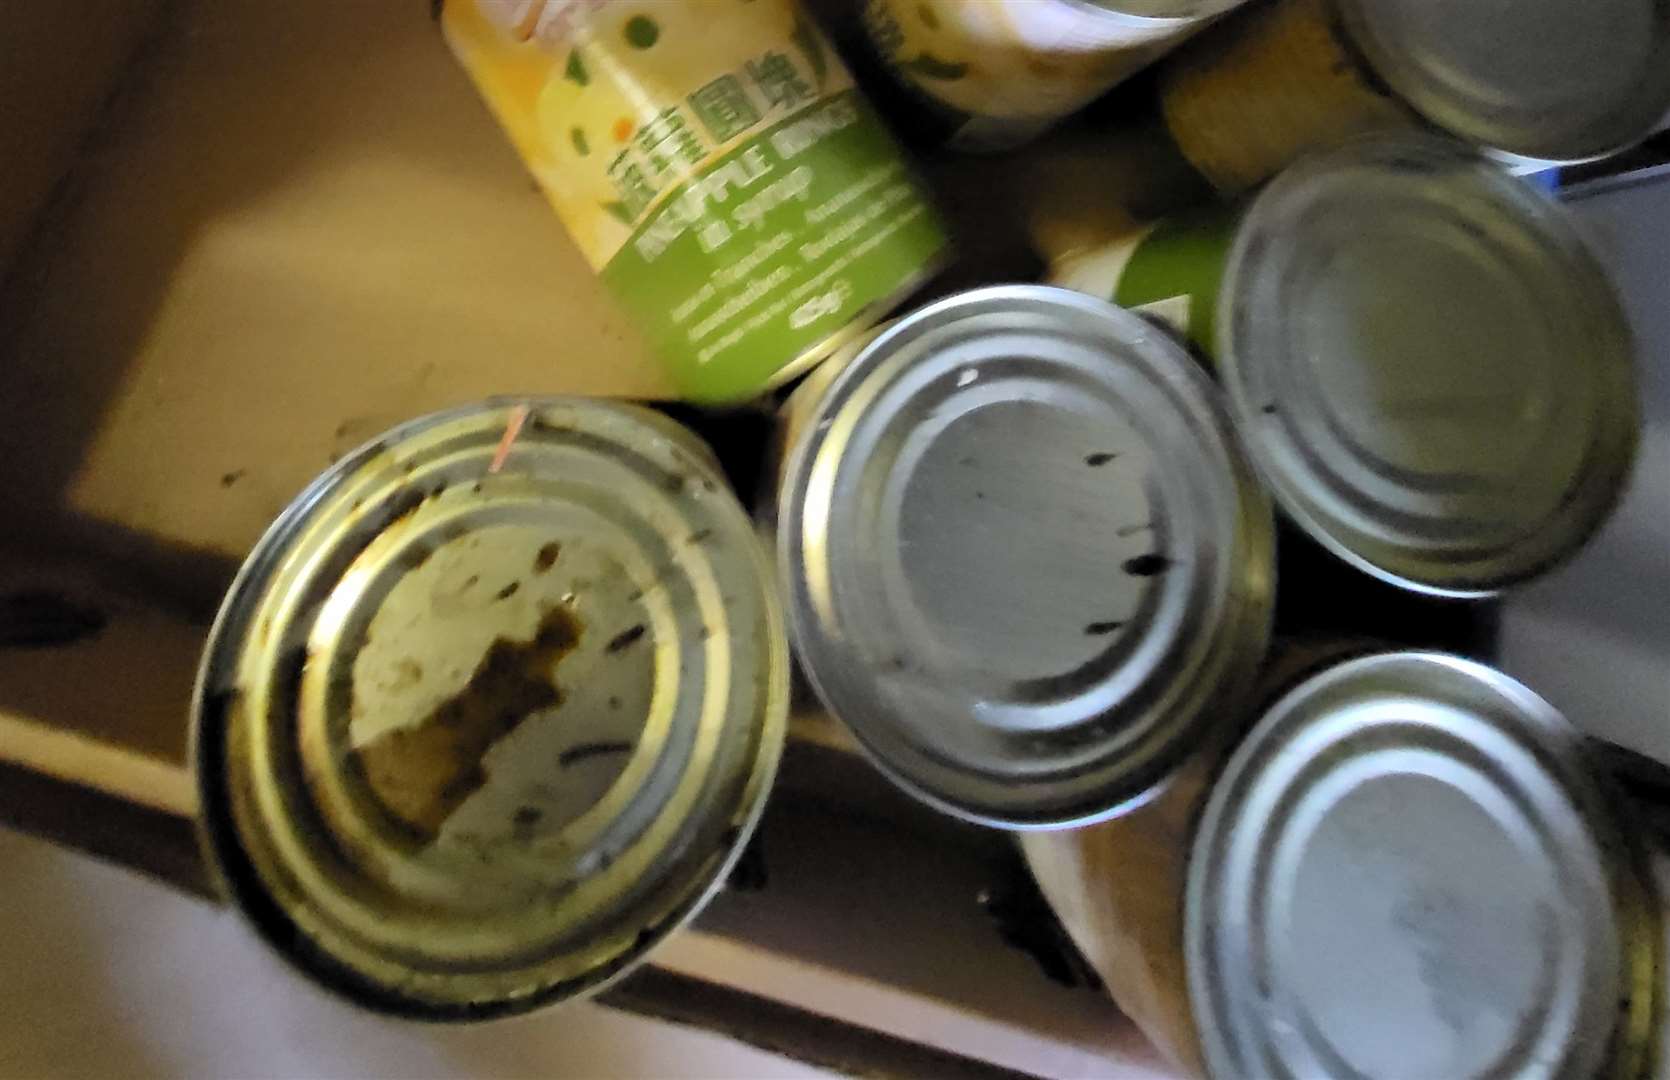 Liquid spilt on cans Picture: SBC